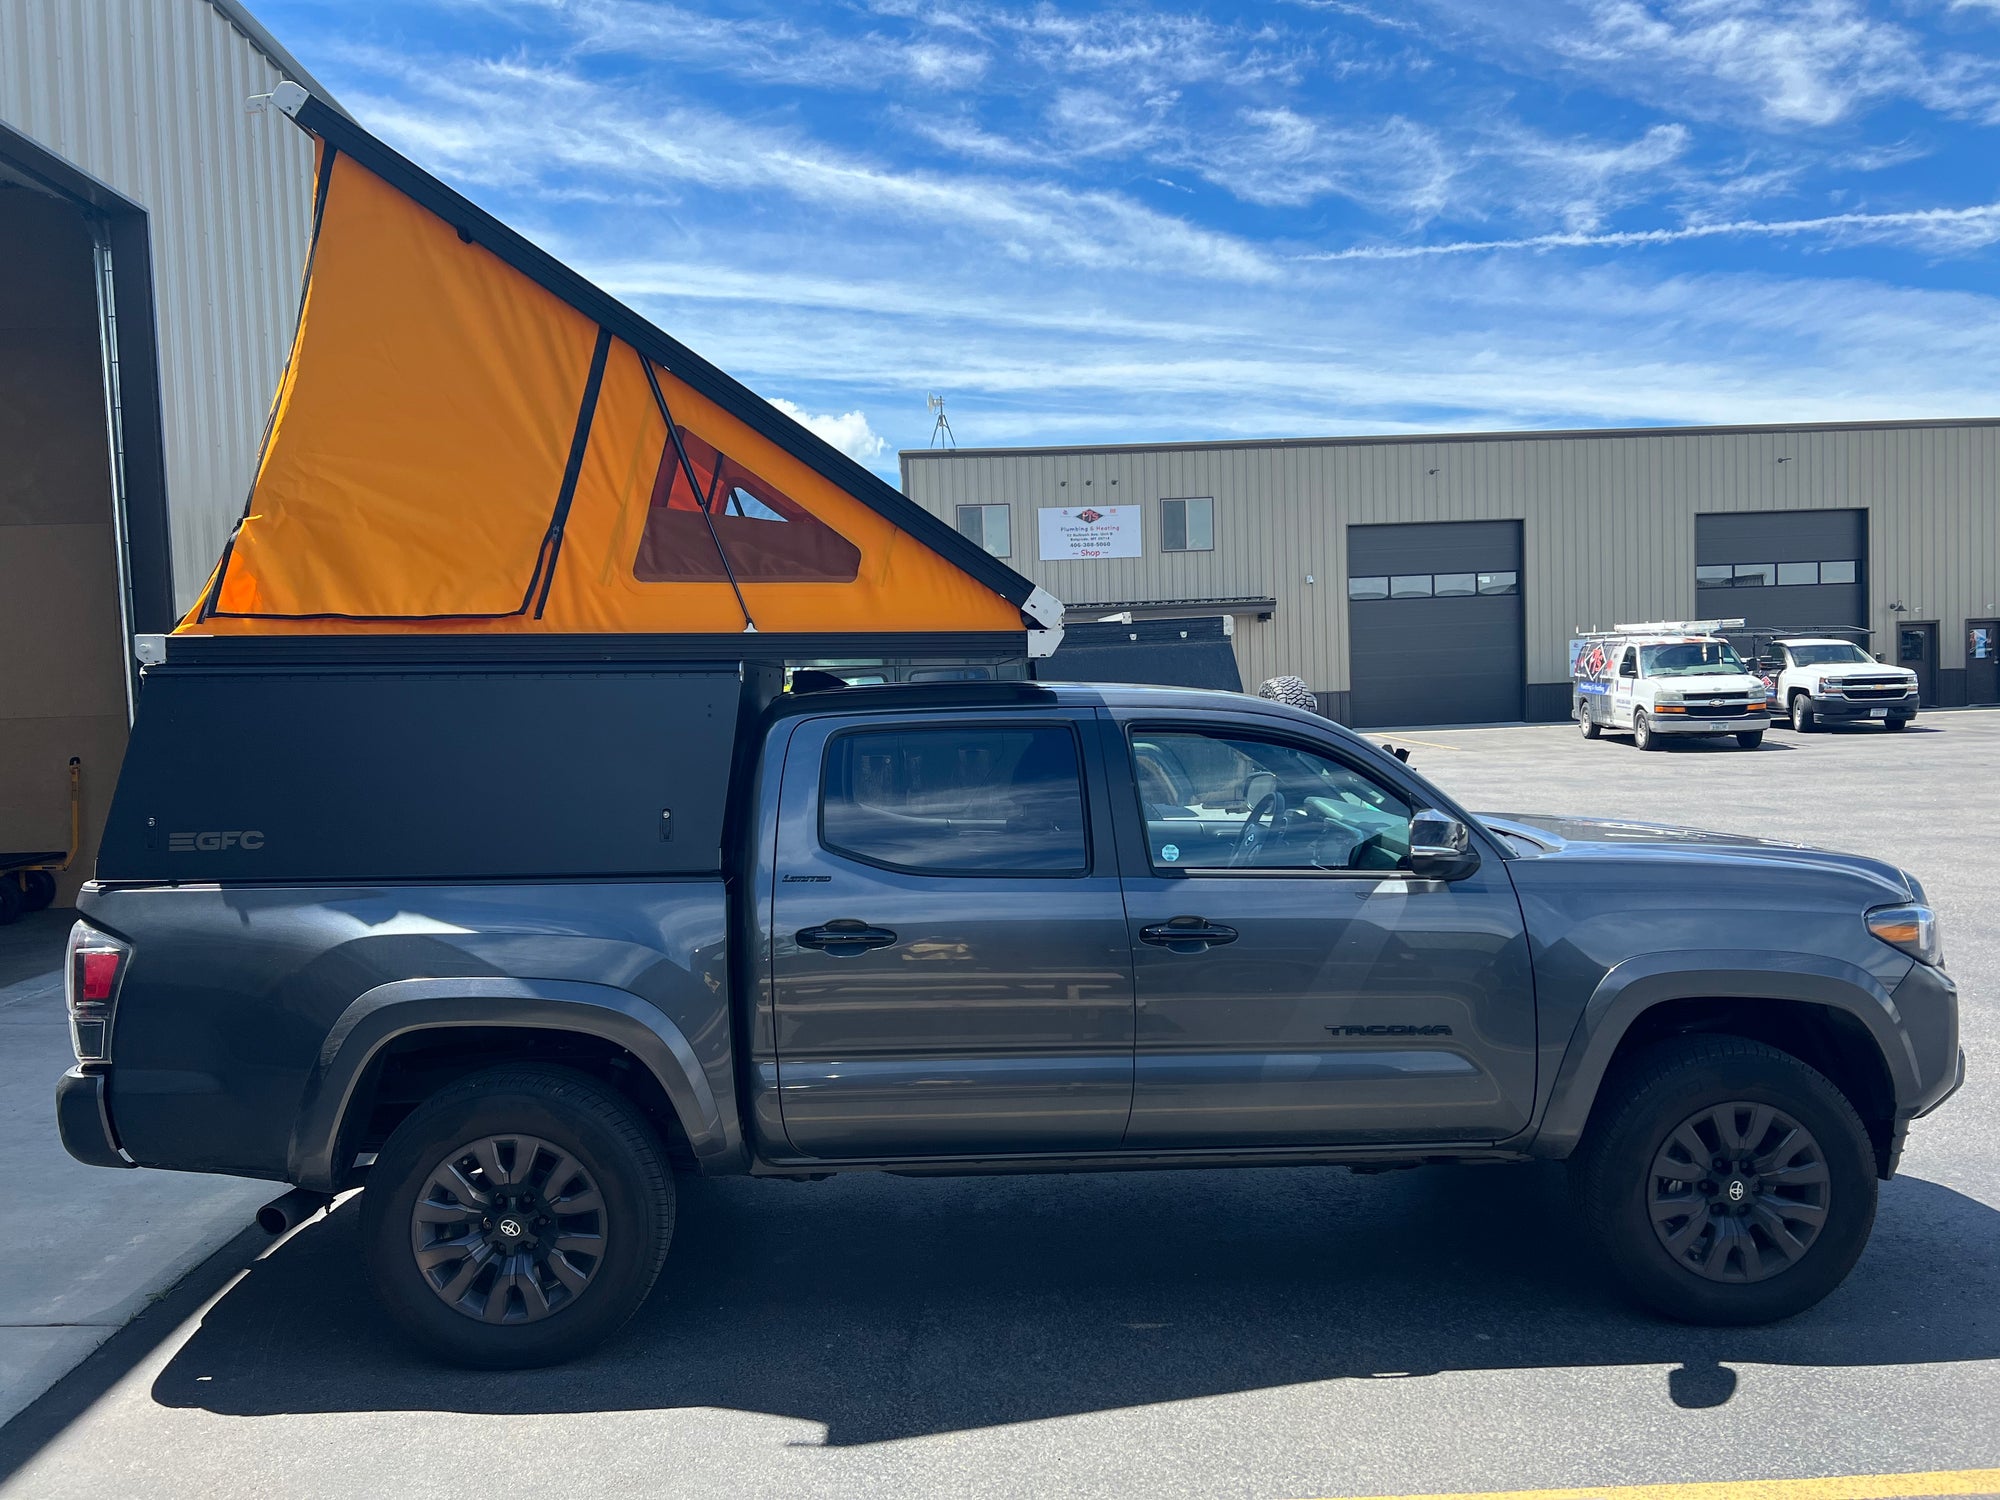 2021 Toyota Tacoma Camper - Build #5218